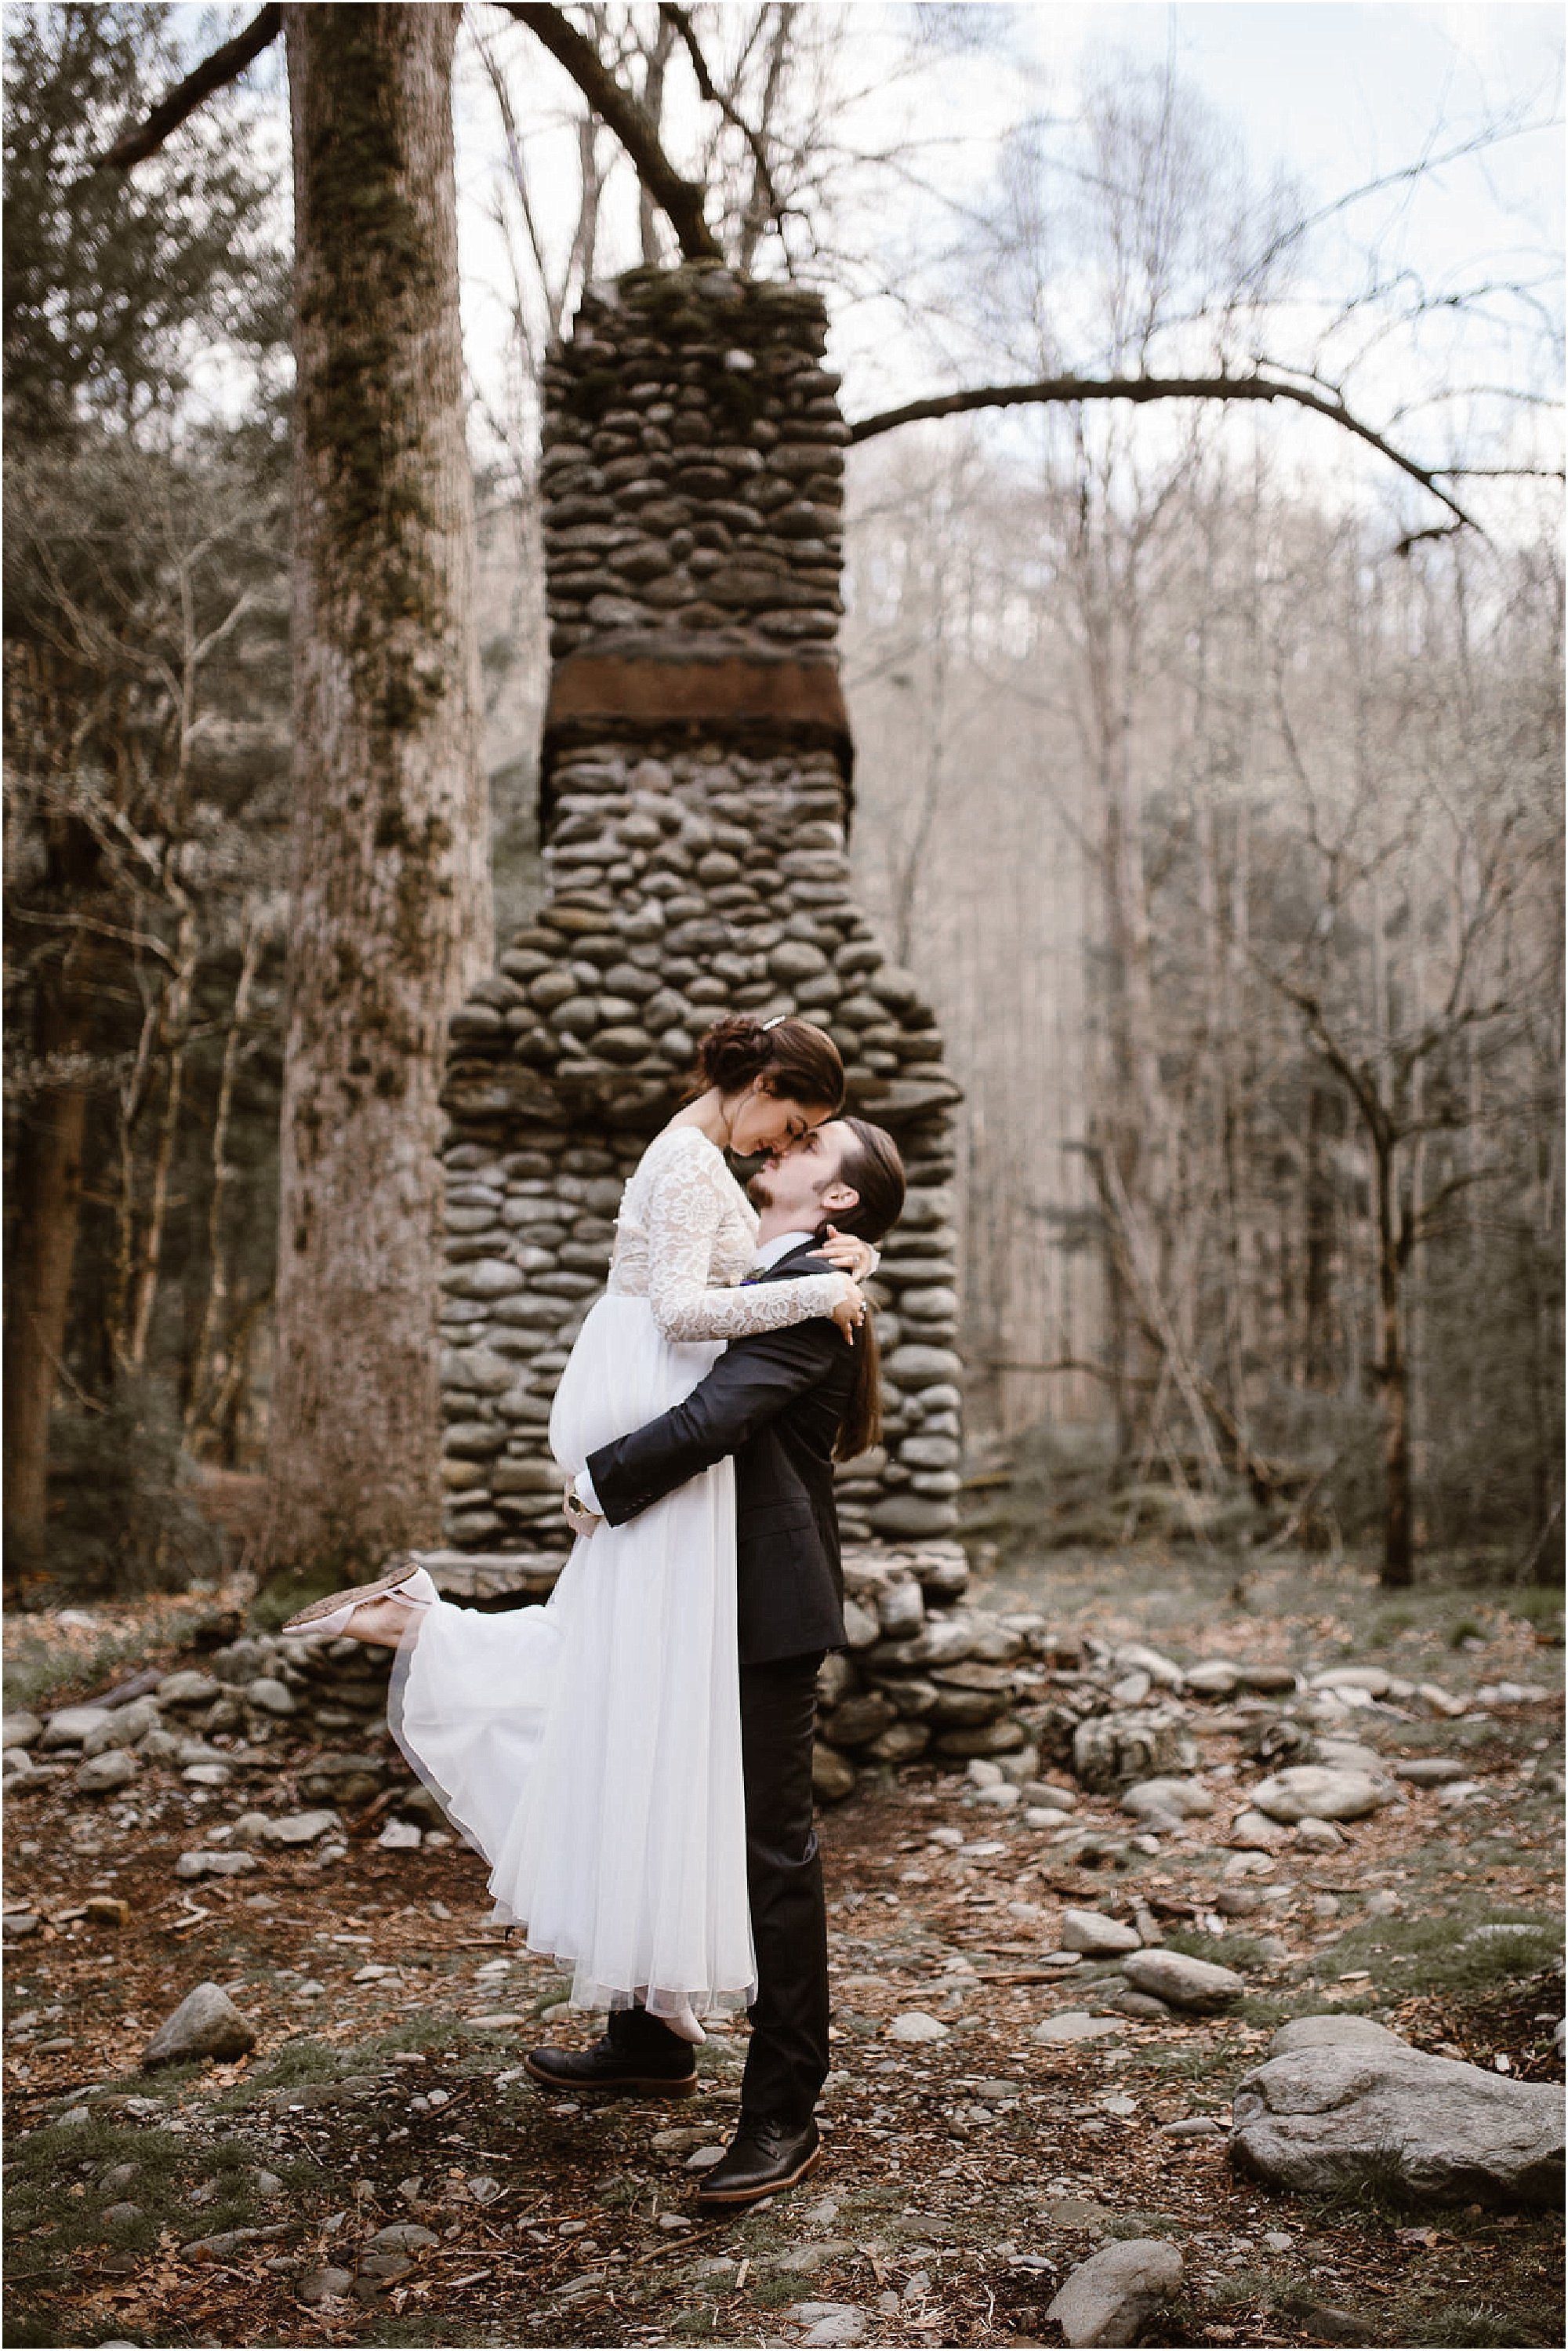 Groom lifting bride in front of chimney at Smokies